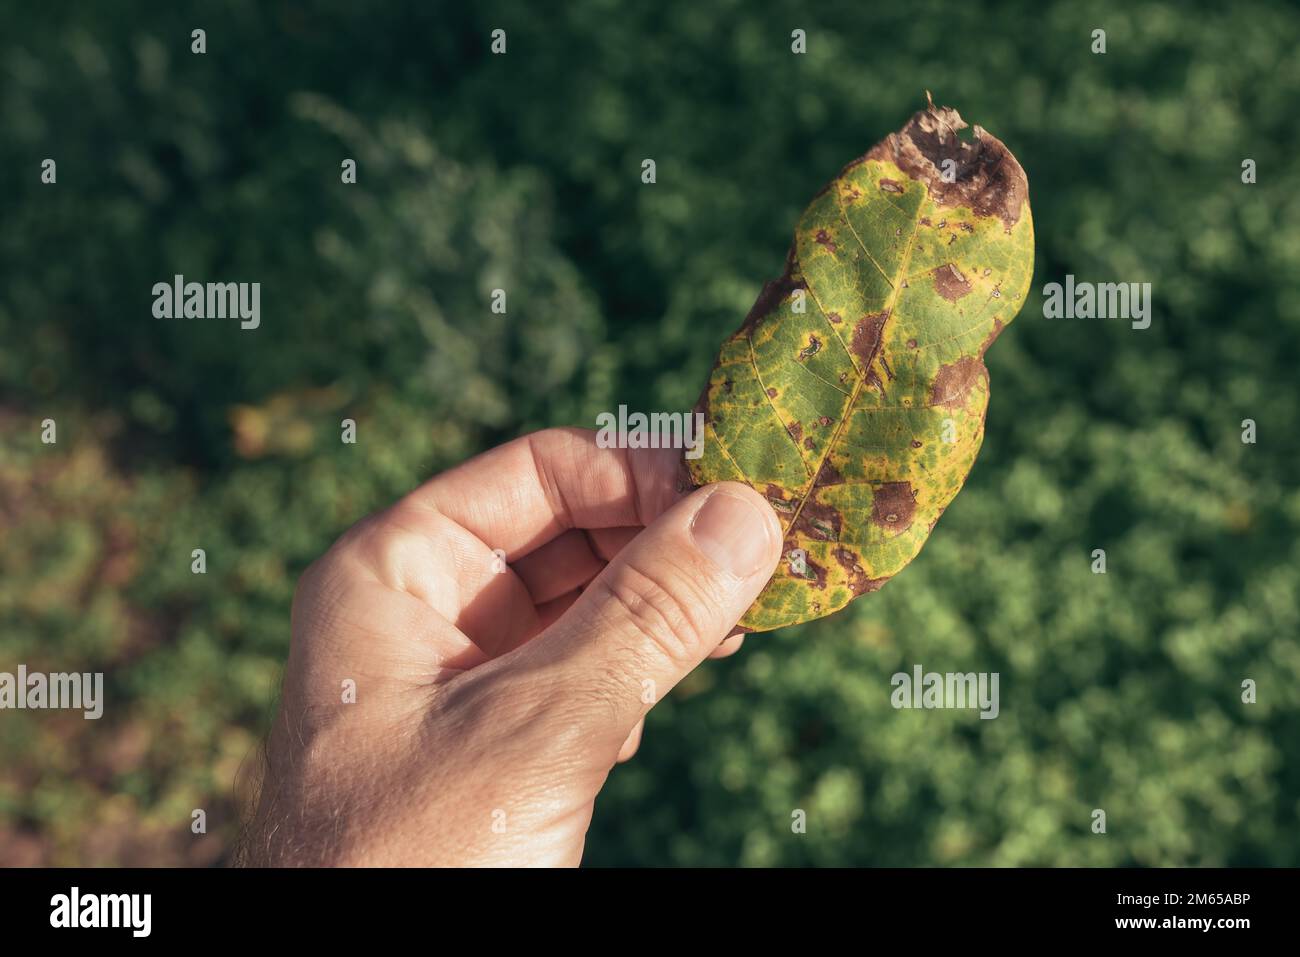 Gardener examining walnut tree leaf with fungal disease symptoms, selective focus Stock Photo